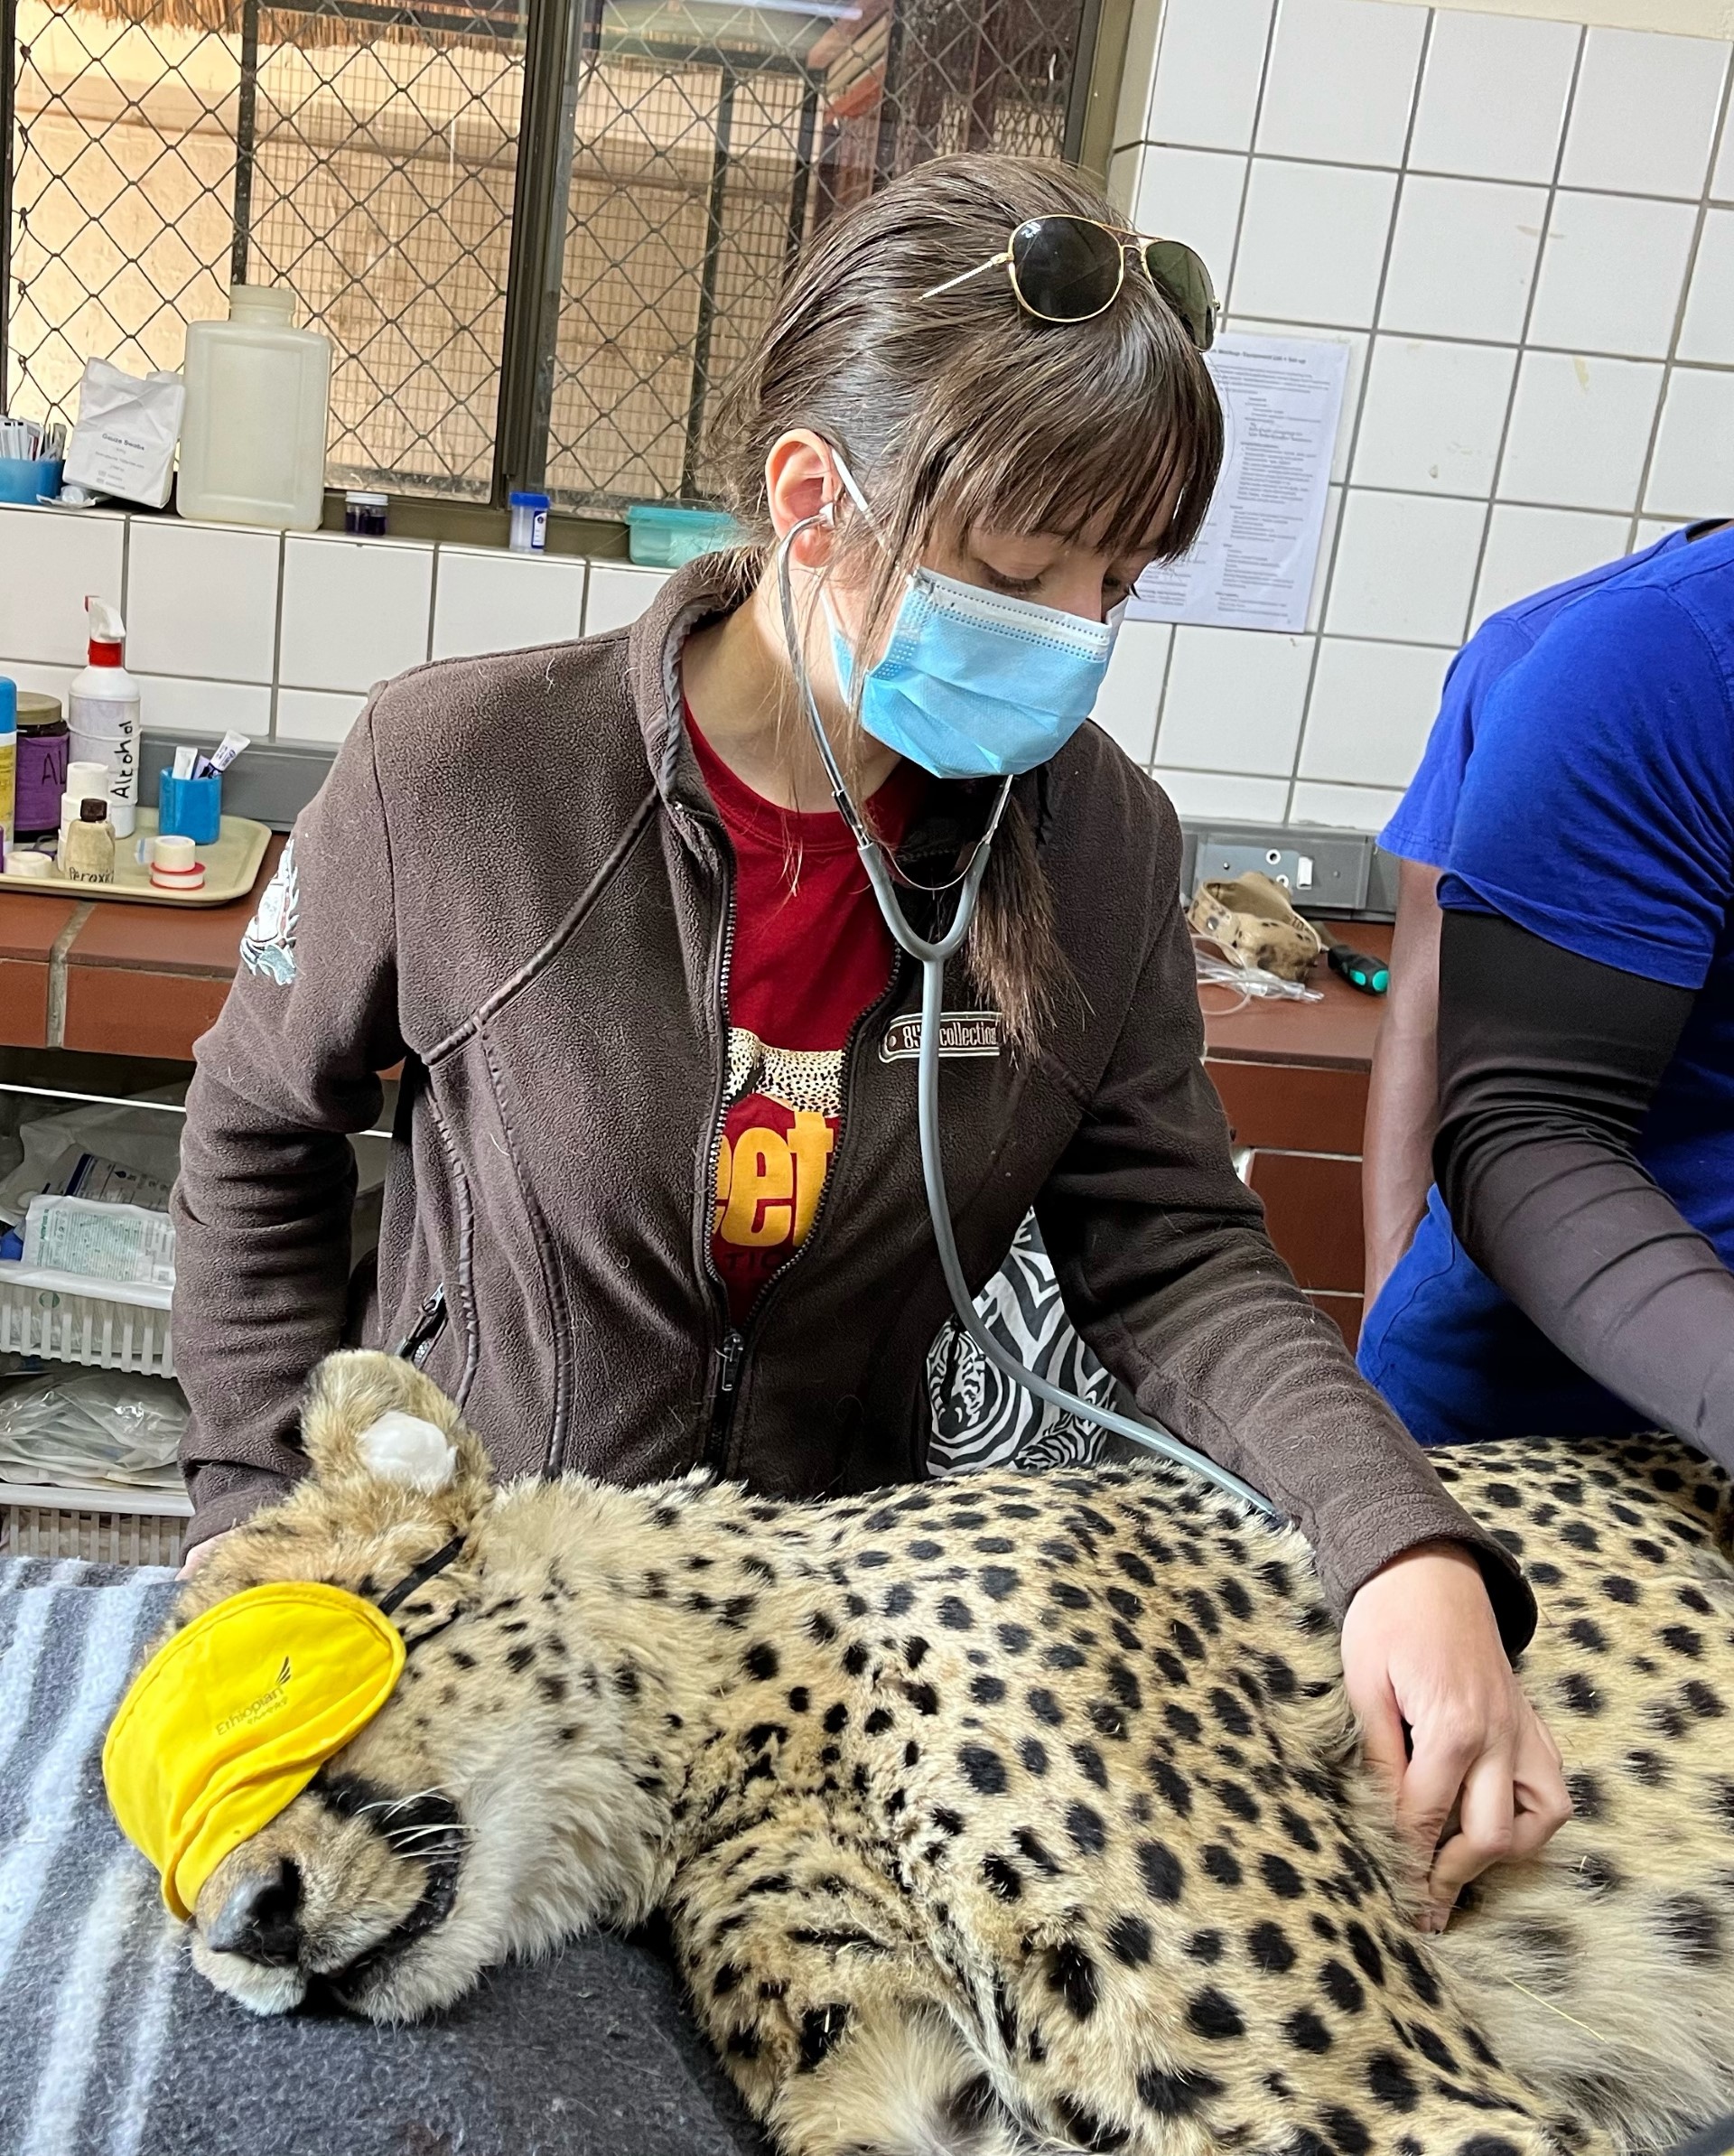 Monitoring a wild cheetah’s anesthesia during examination. Photo: Vistoria Tuhemwe